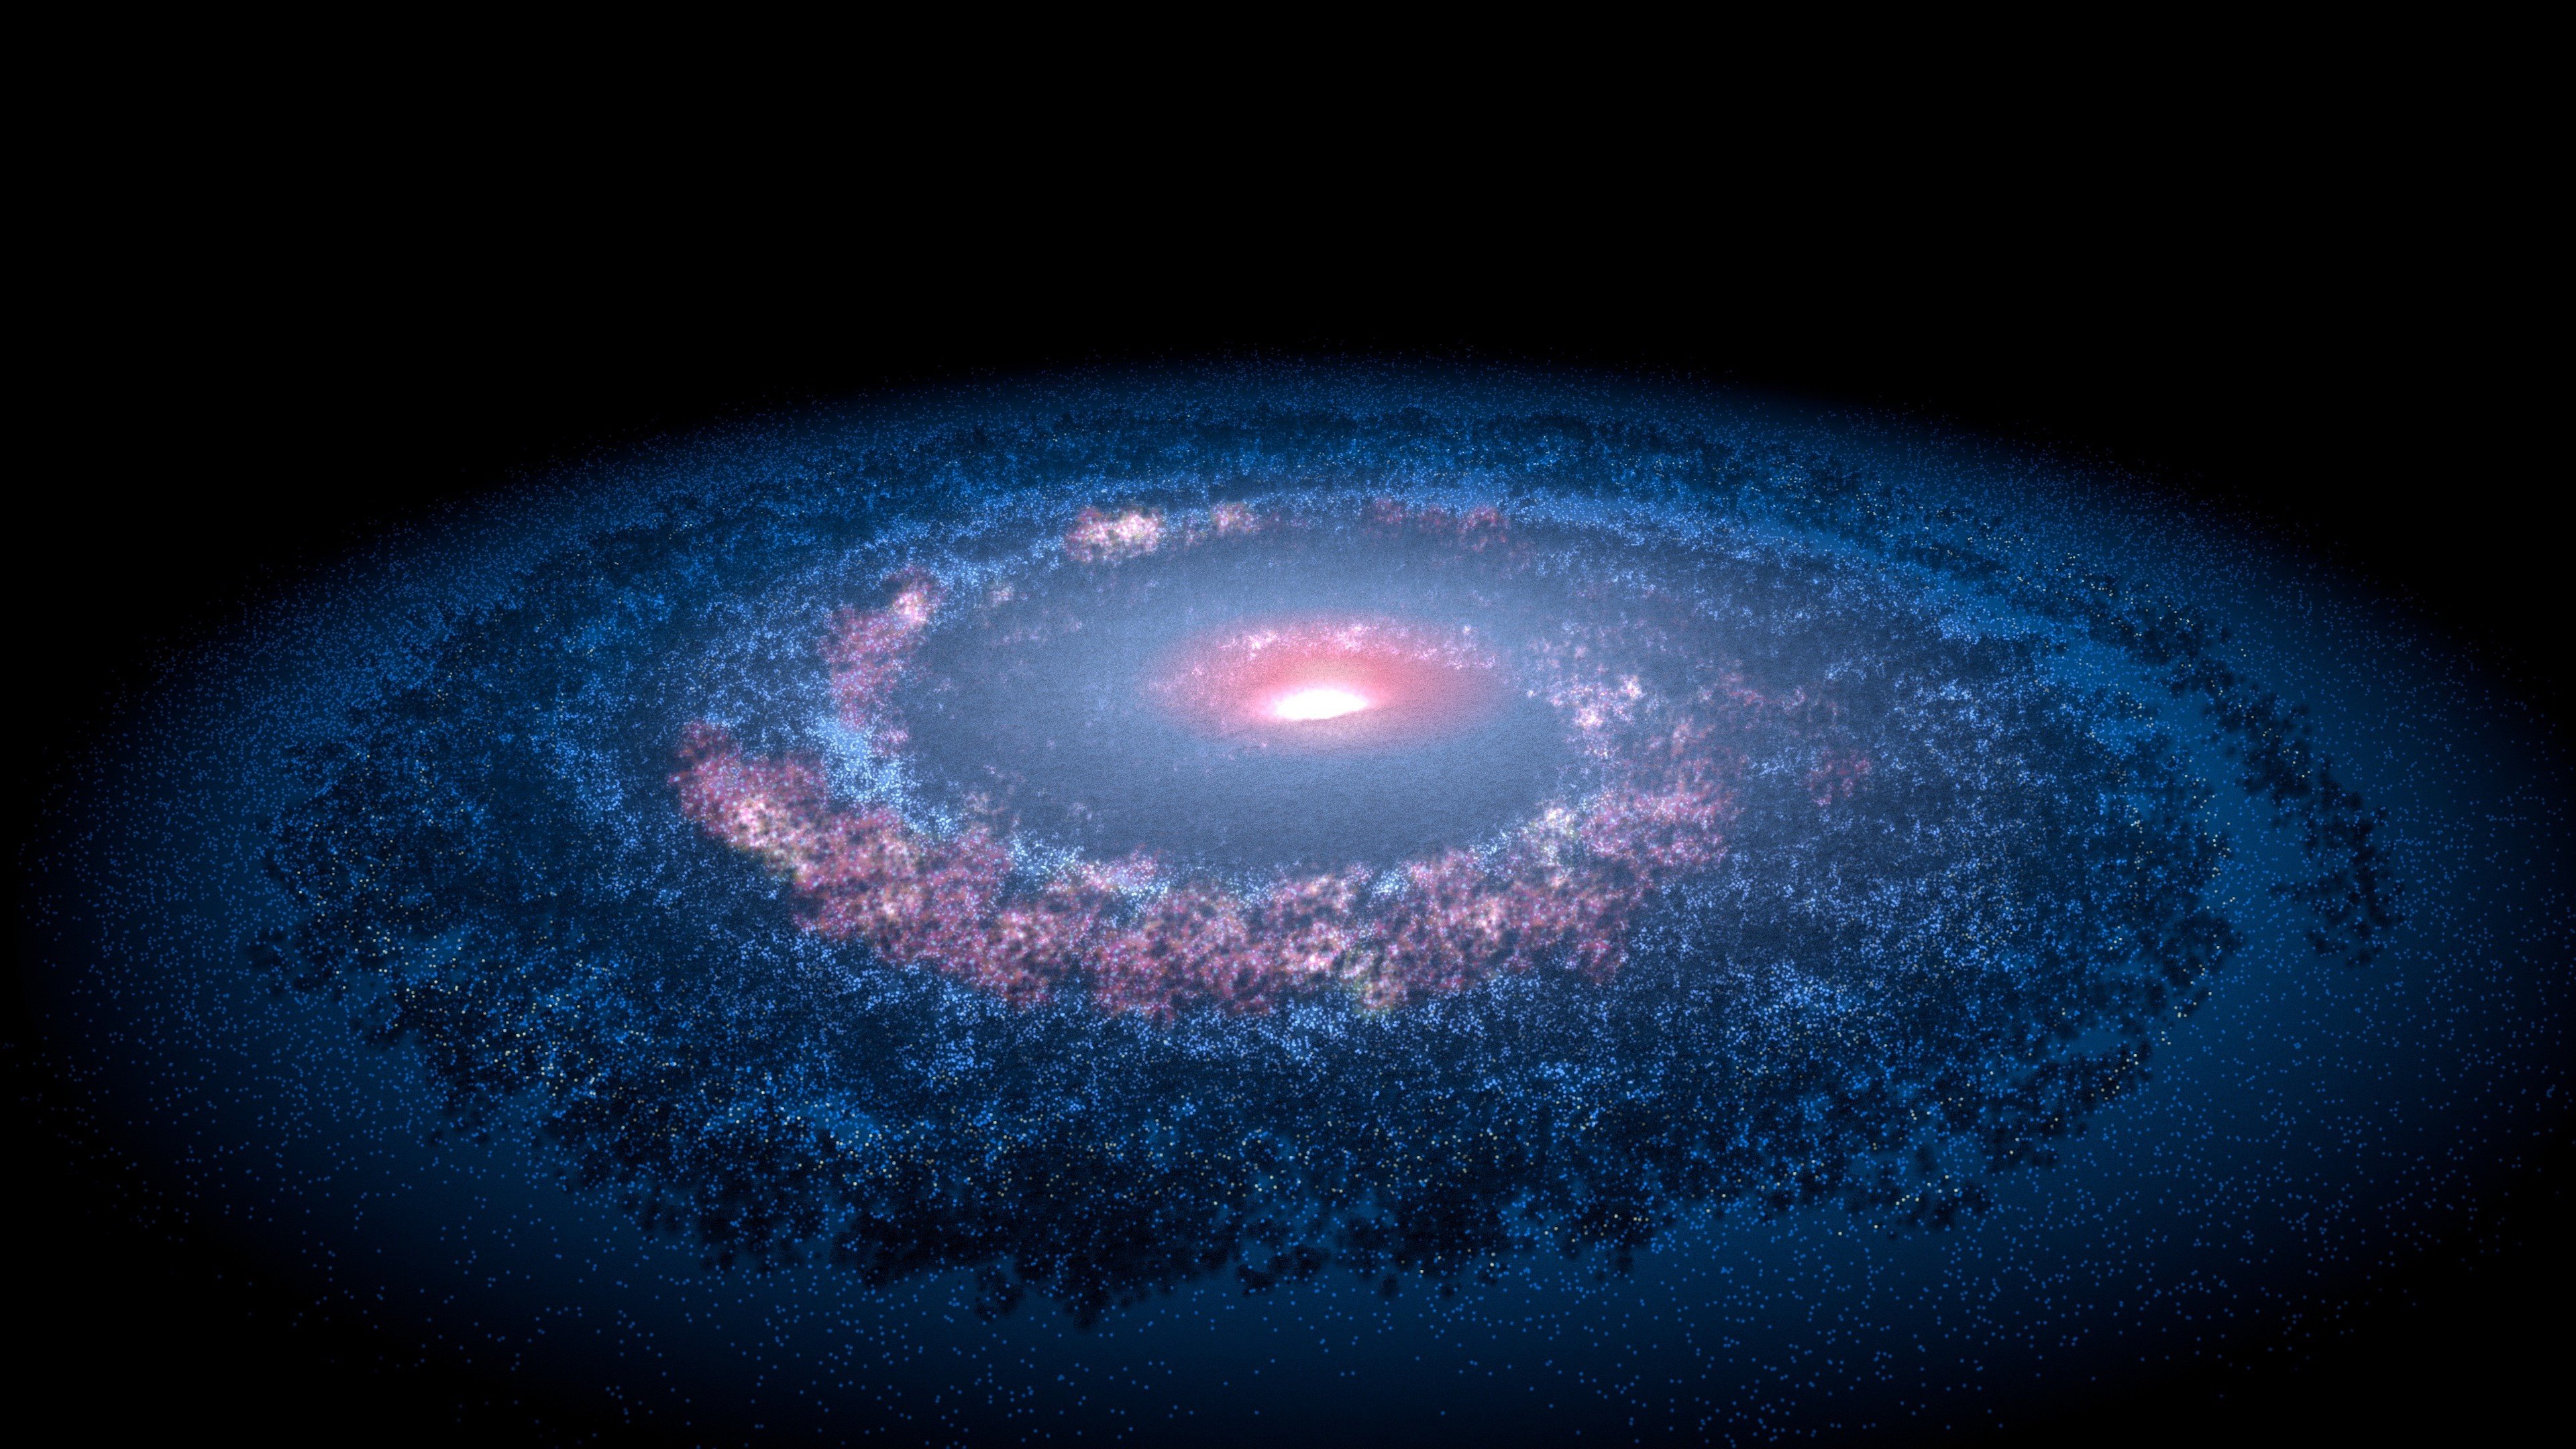 Black Background Digital Art Universe Space Milky Way Ellipses Blue Hd Wallpapers Desktop And Mobile Images Photos